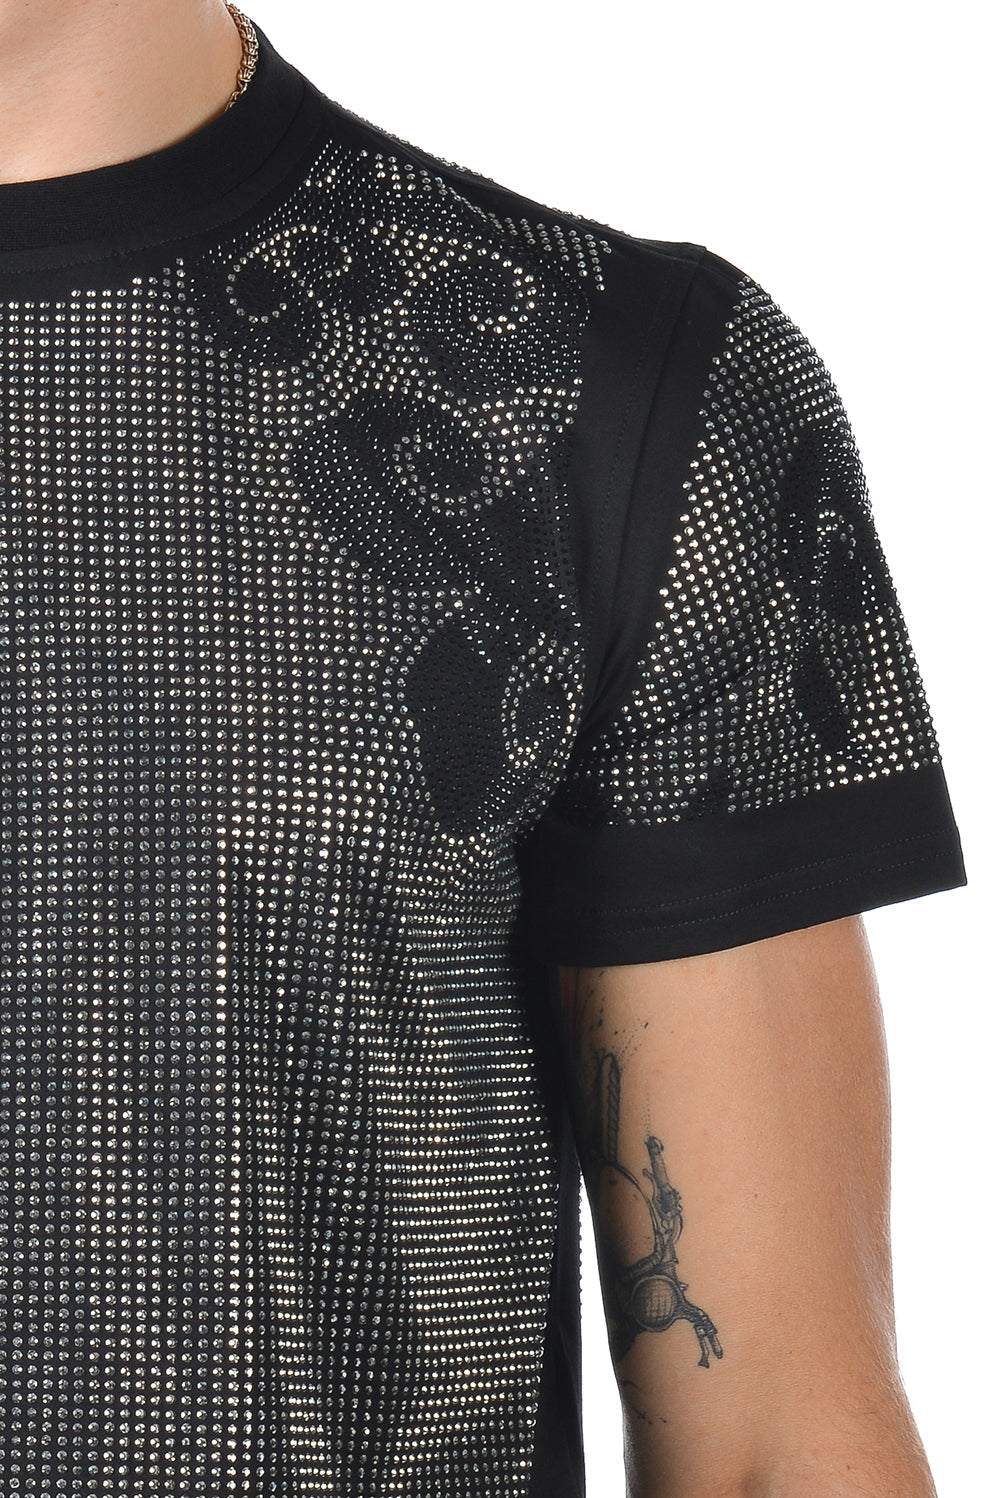 Barabas Men's Rhinestone Floral Oriental Print Pattern T-Shirt PS123 Black and Silver